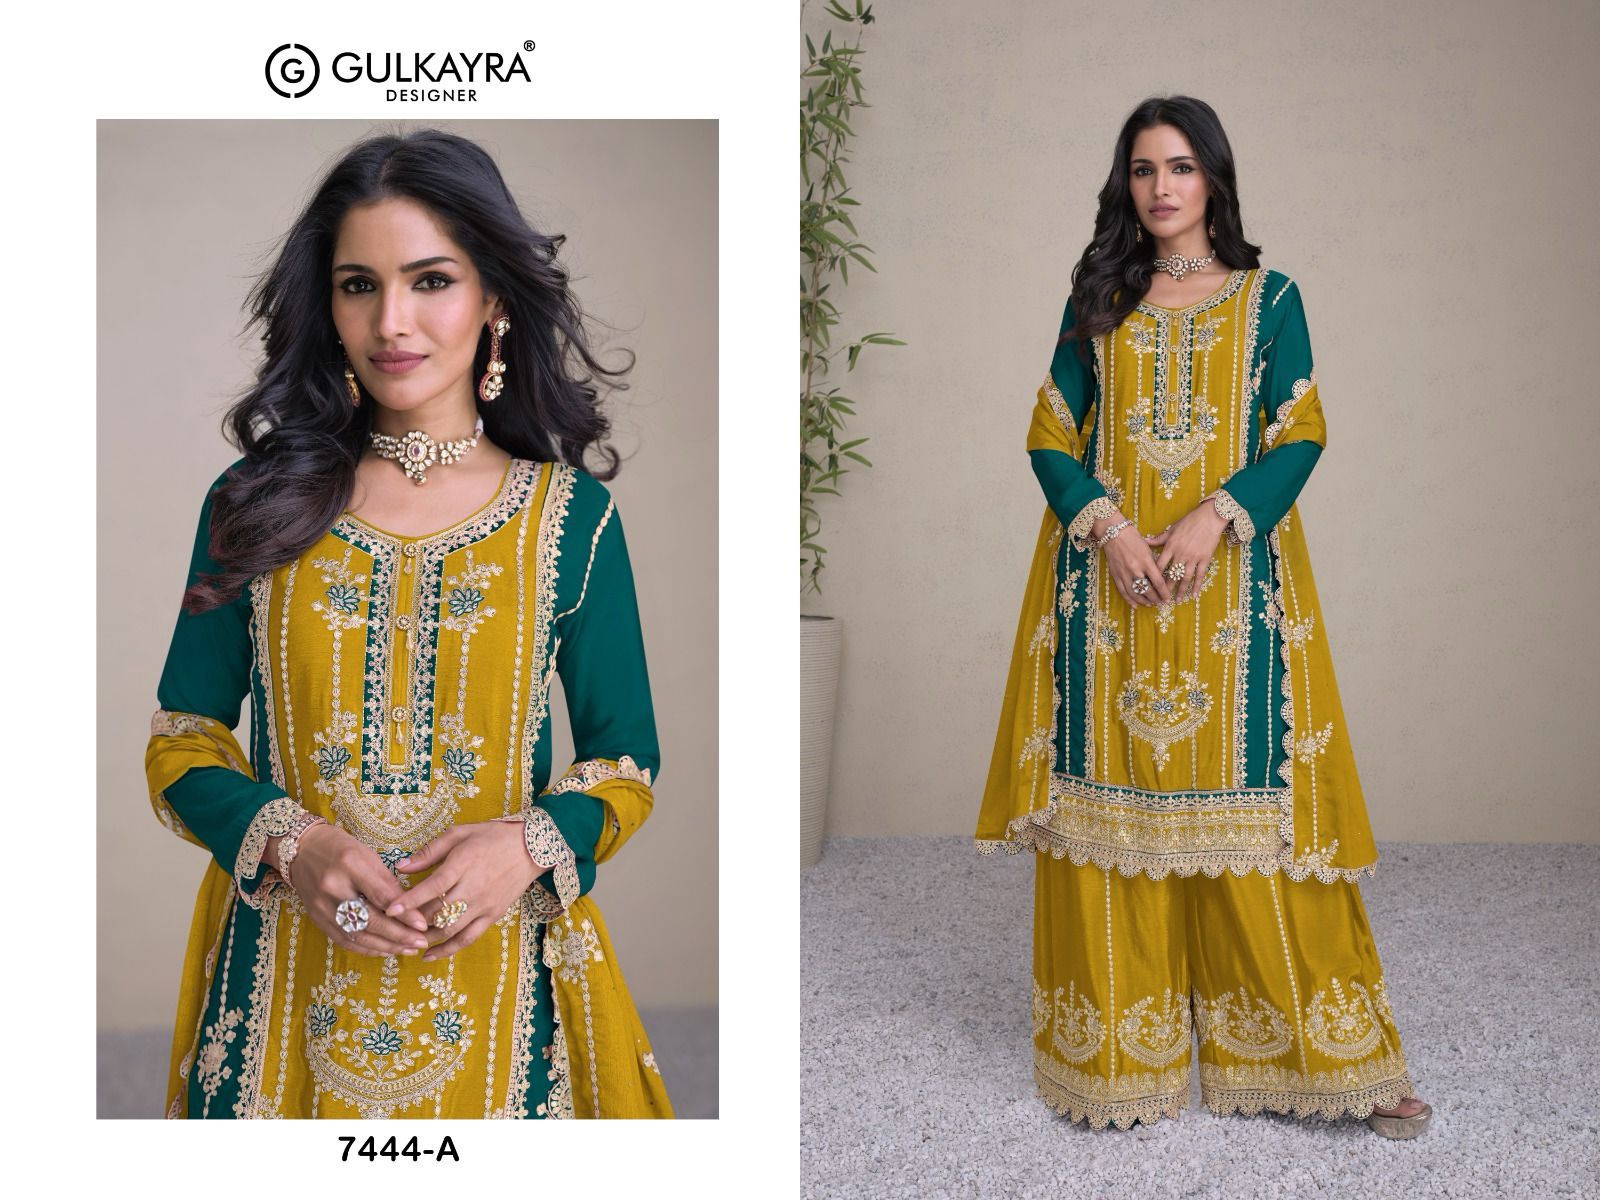 Gulkayra Designer Presents Sabina With Embroidery Work Salwar Suit Ethnic Dress